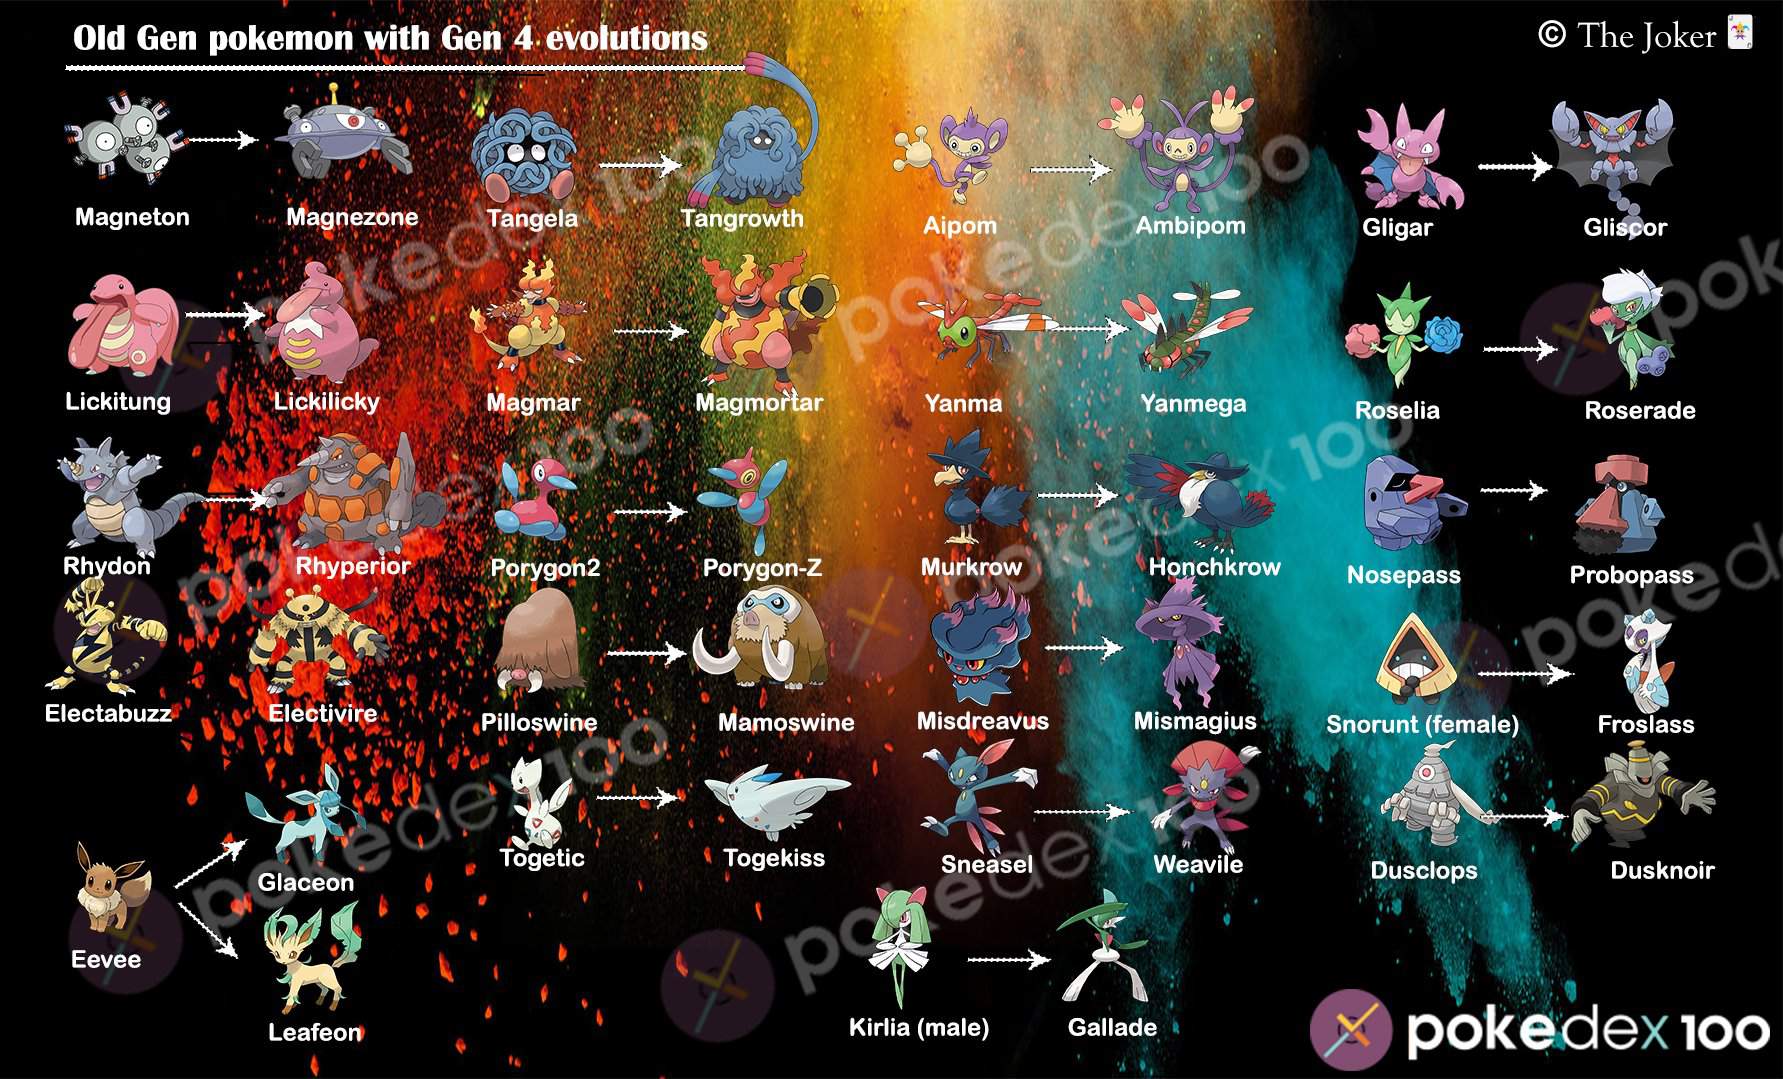 Nosepass evolution chart